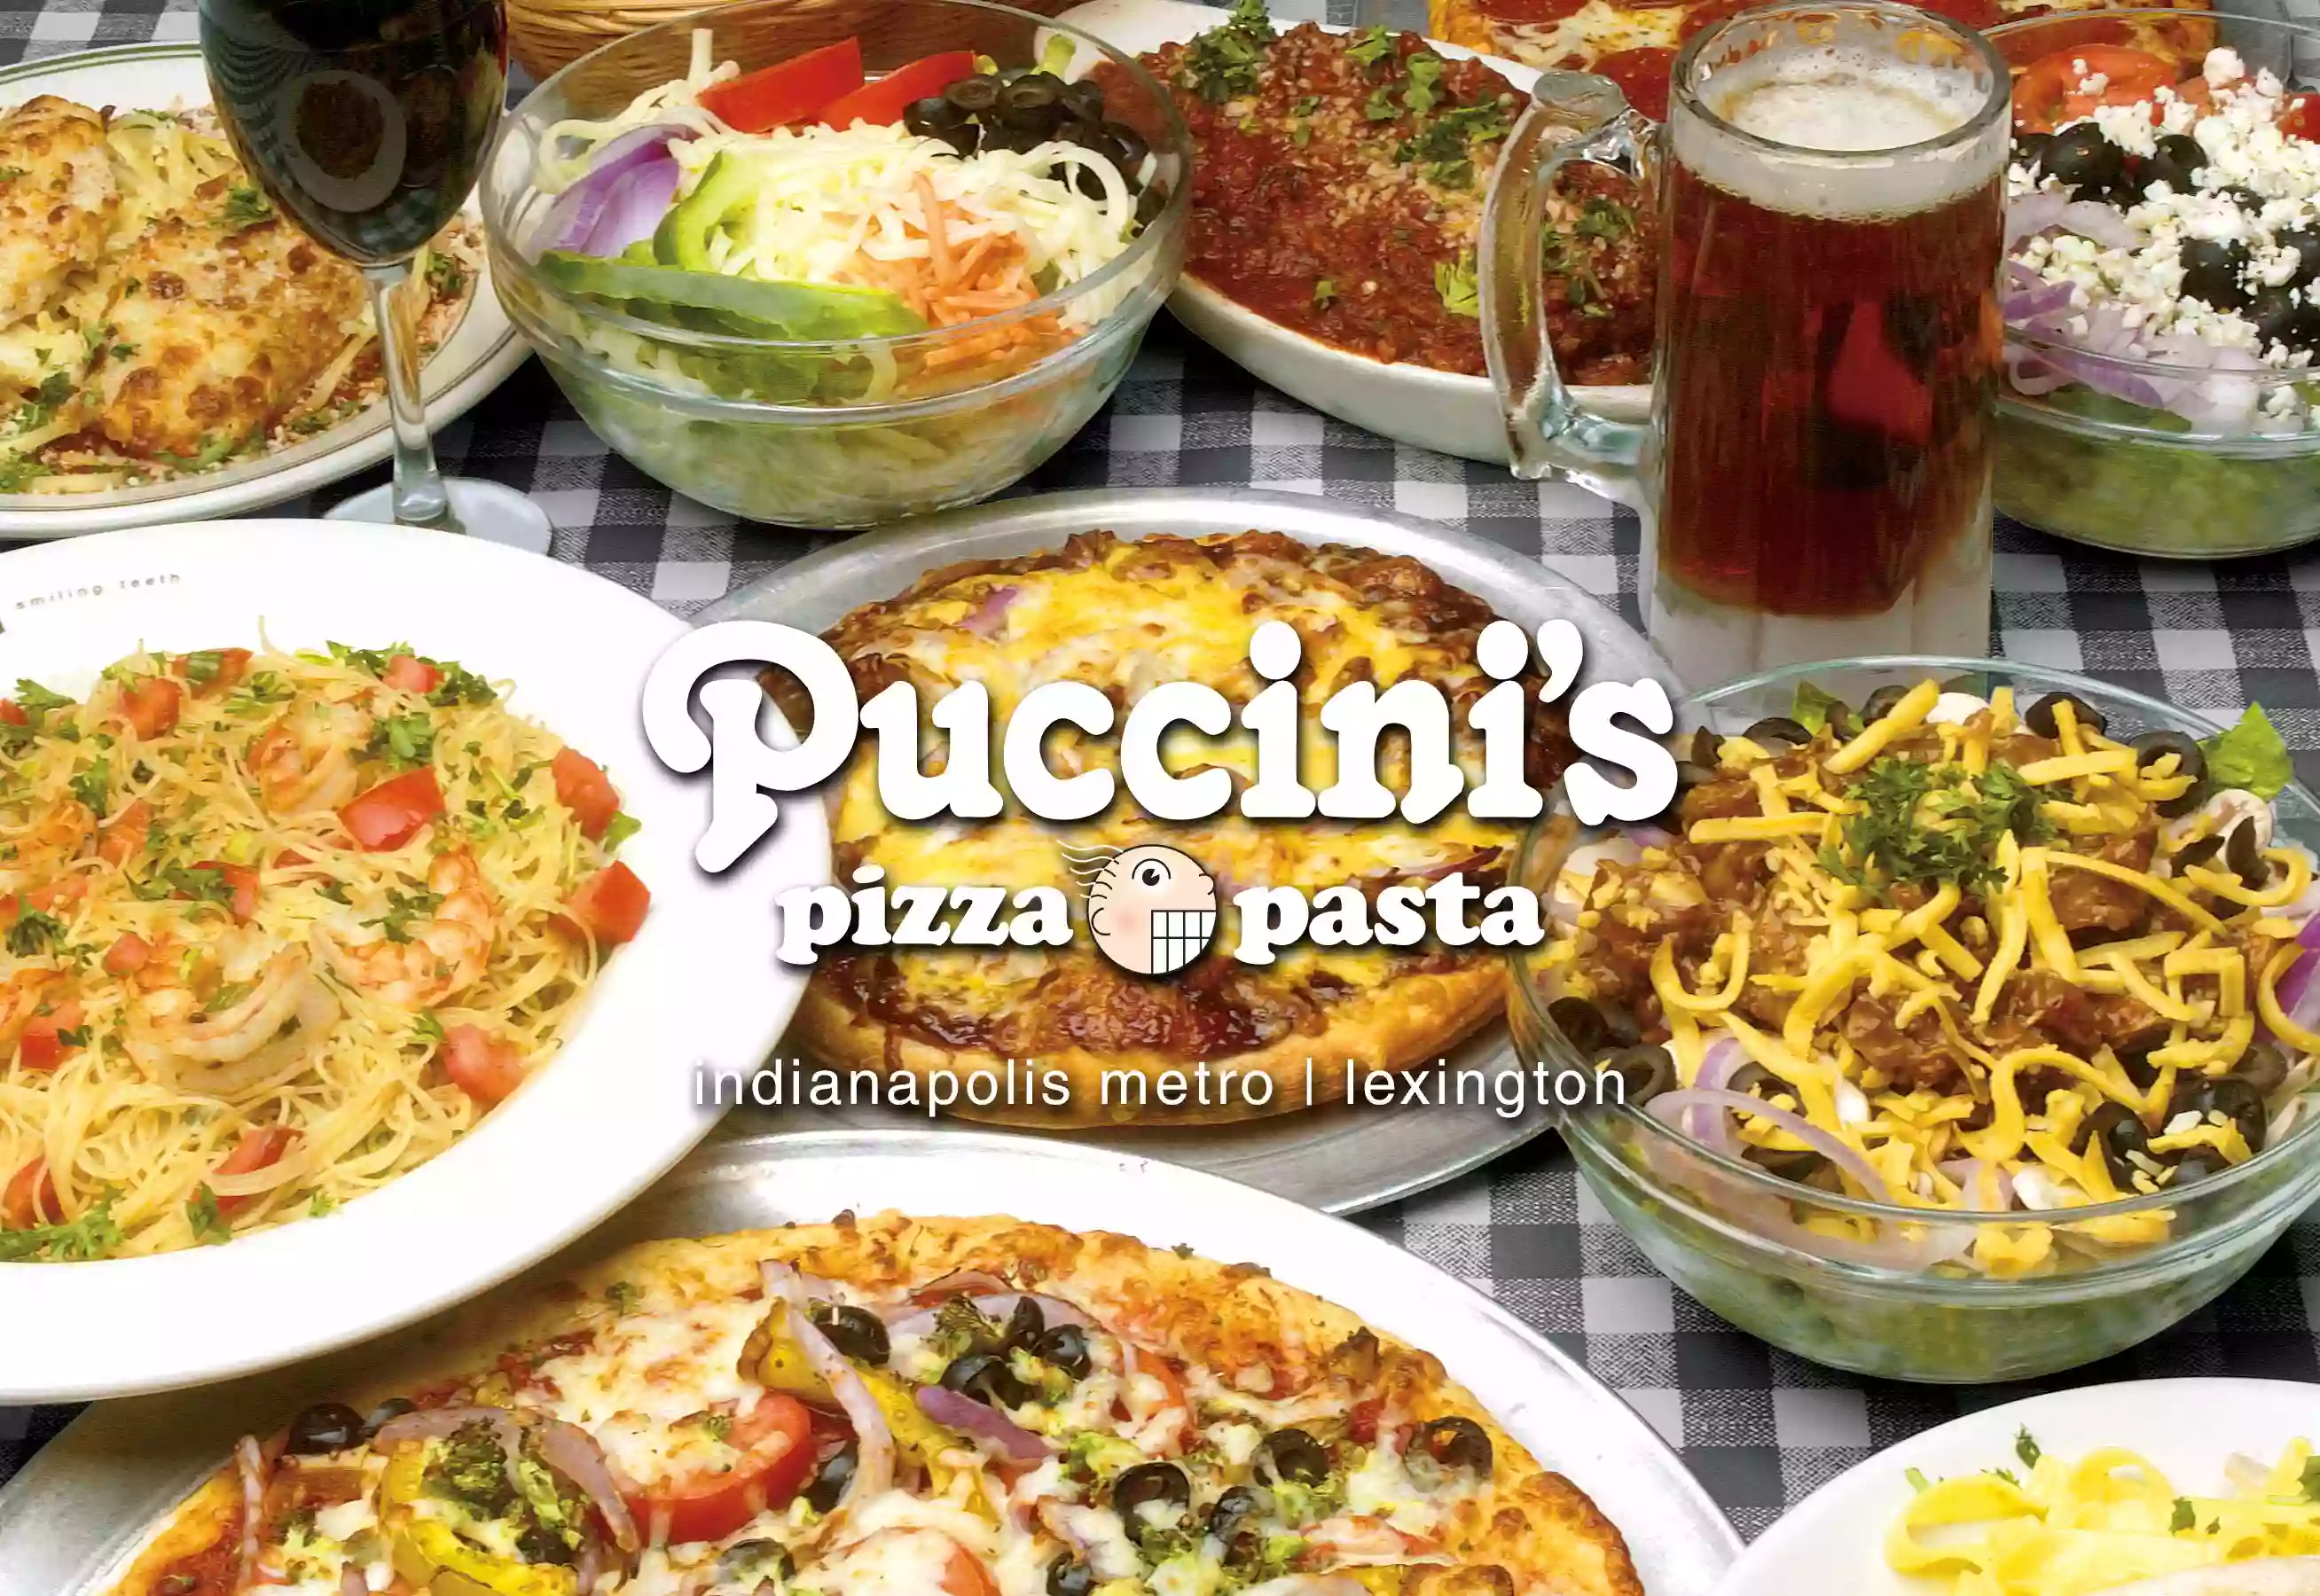 Puccini's Pizza Pasta-Fishers